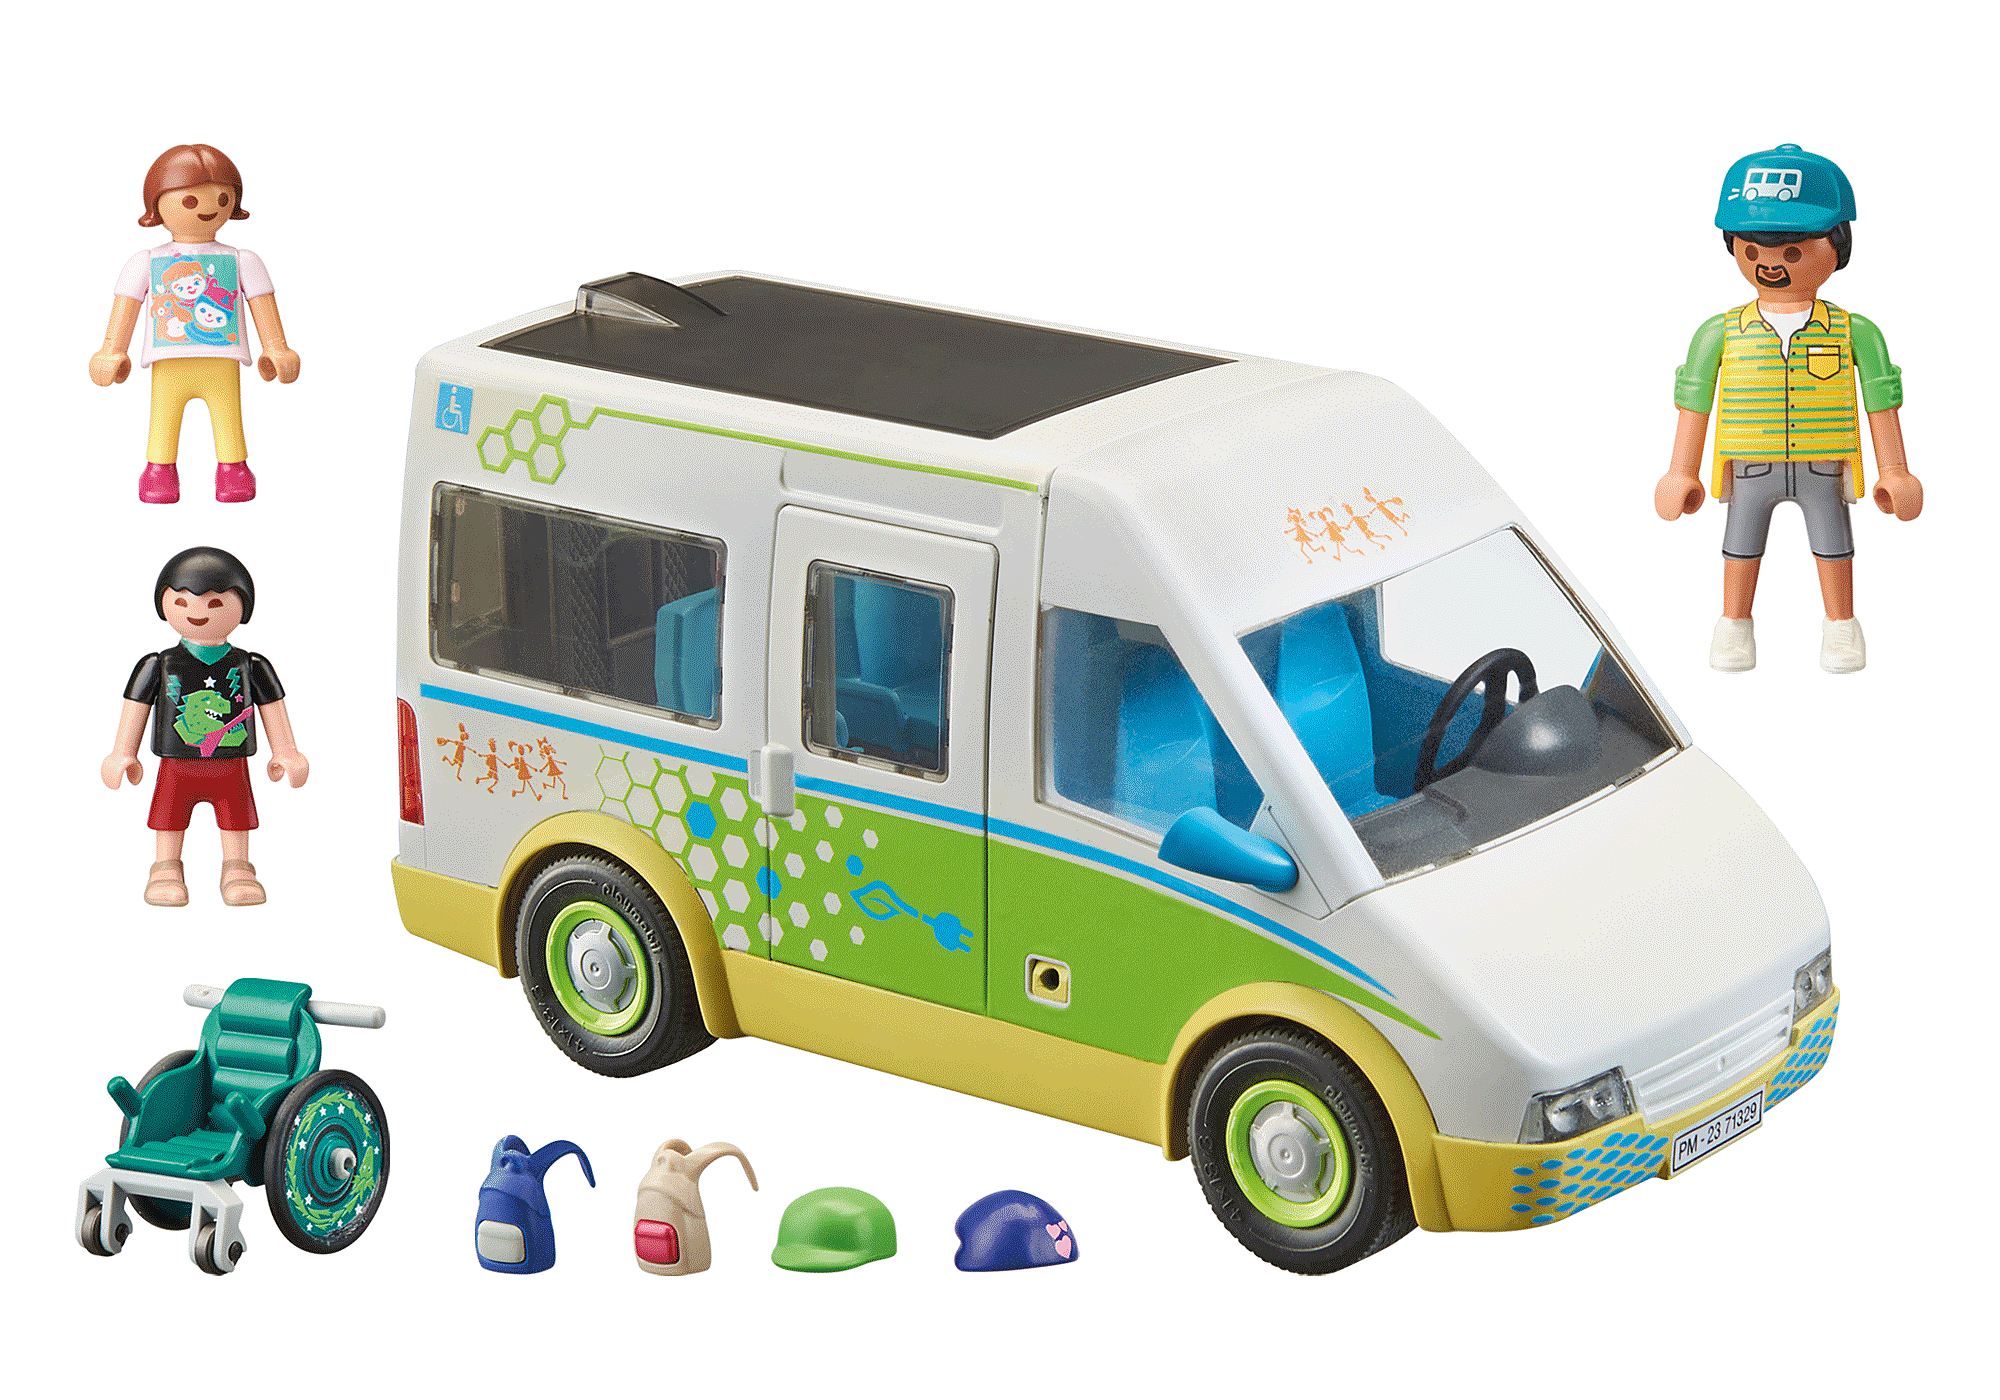 71329 - Playmobil City Life - Bus scolaire